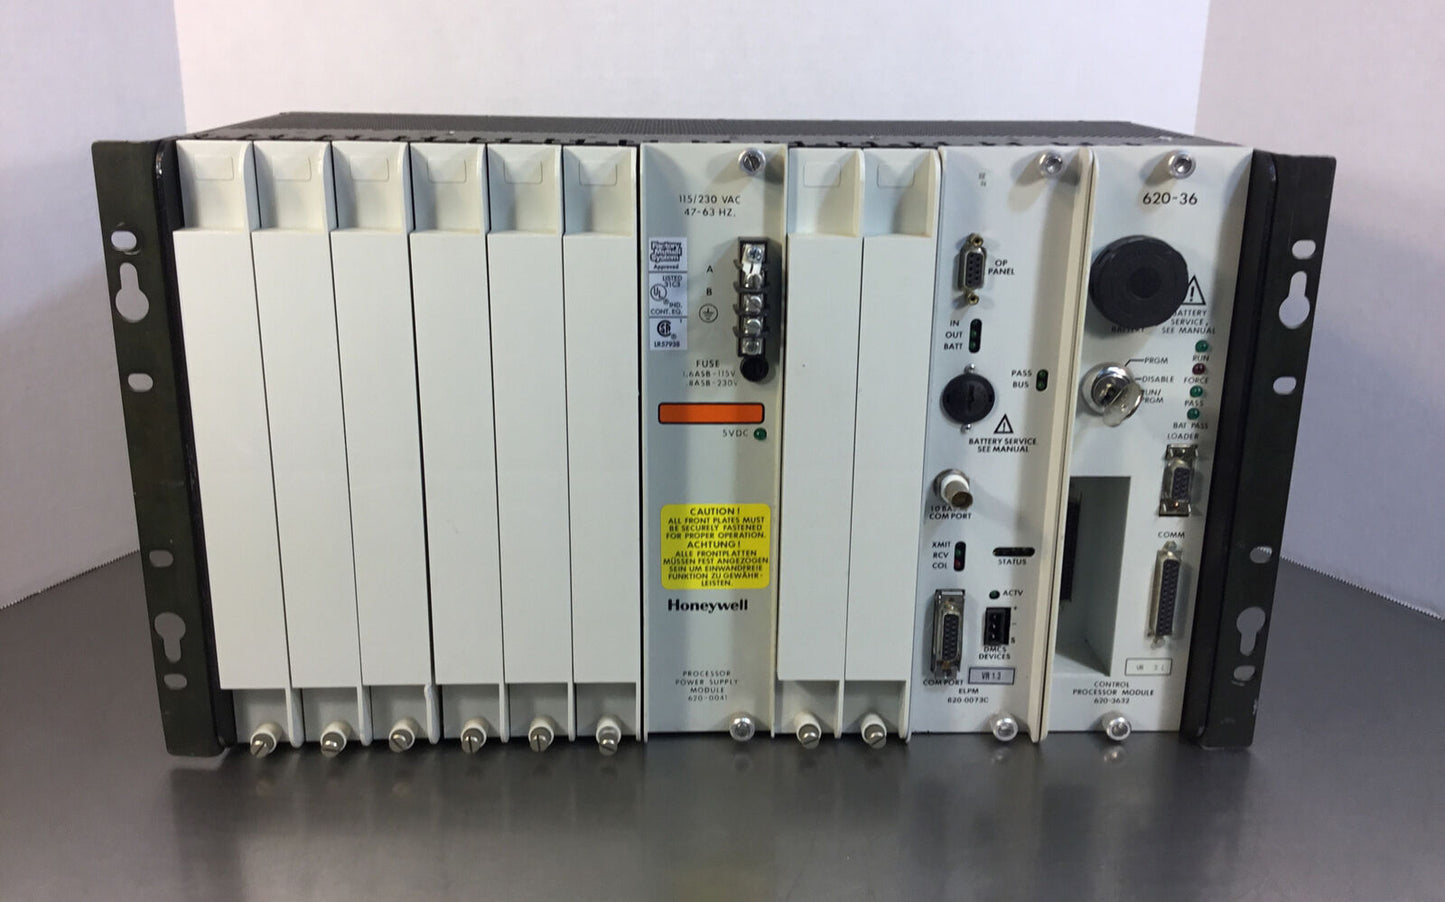 Honeywell 620-36 PLC Rack with 620-0041 + 620-0073C + 620-3632 - See Photos 3C-4